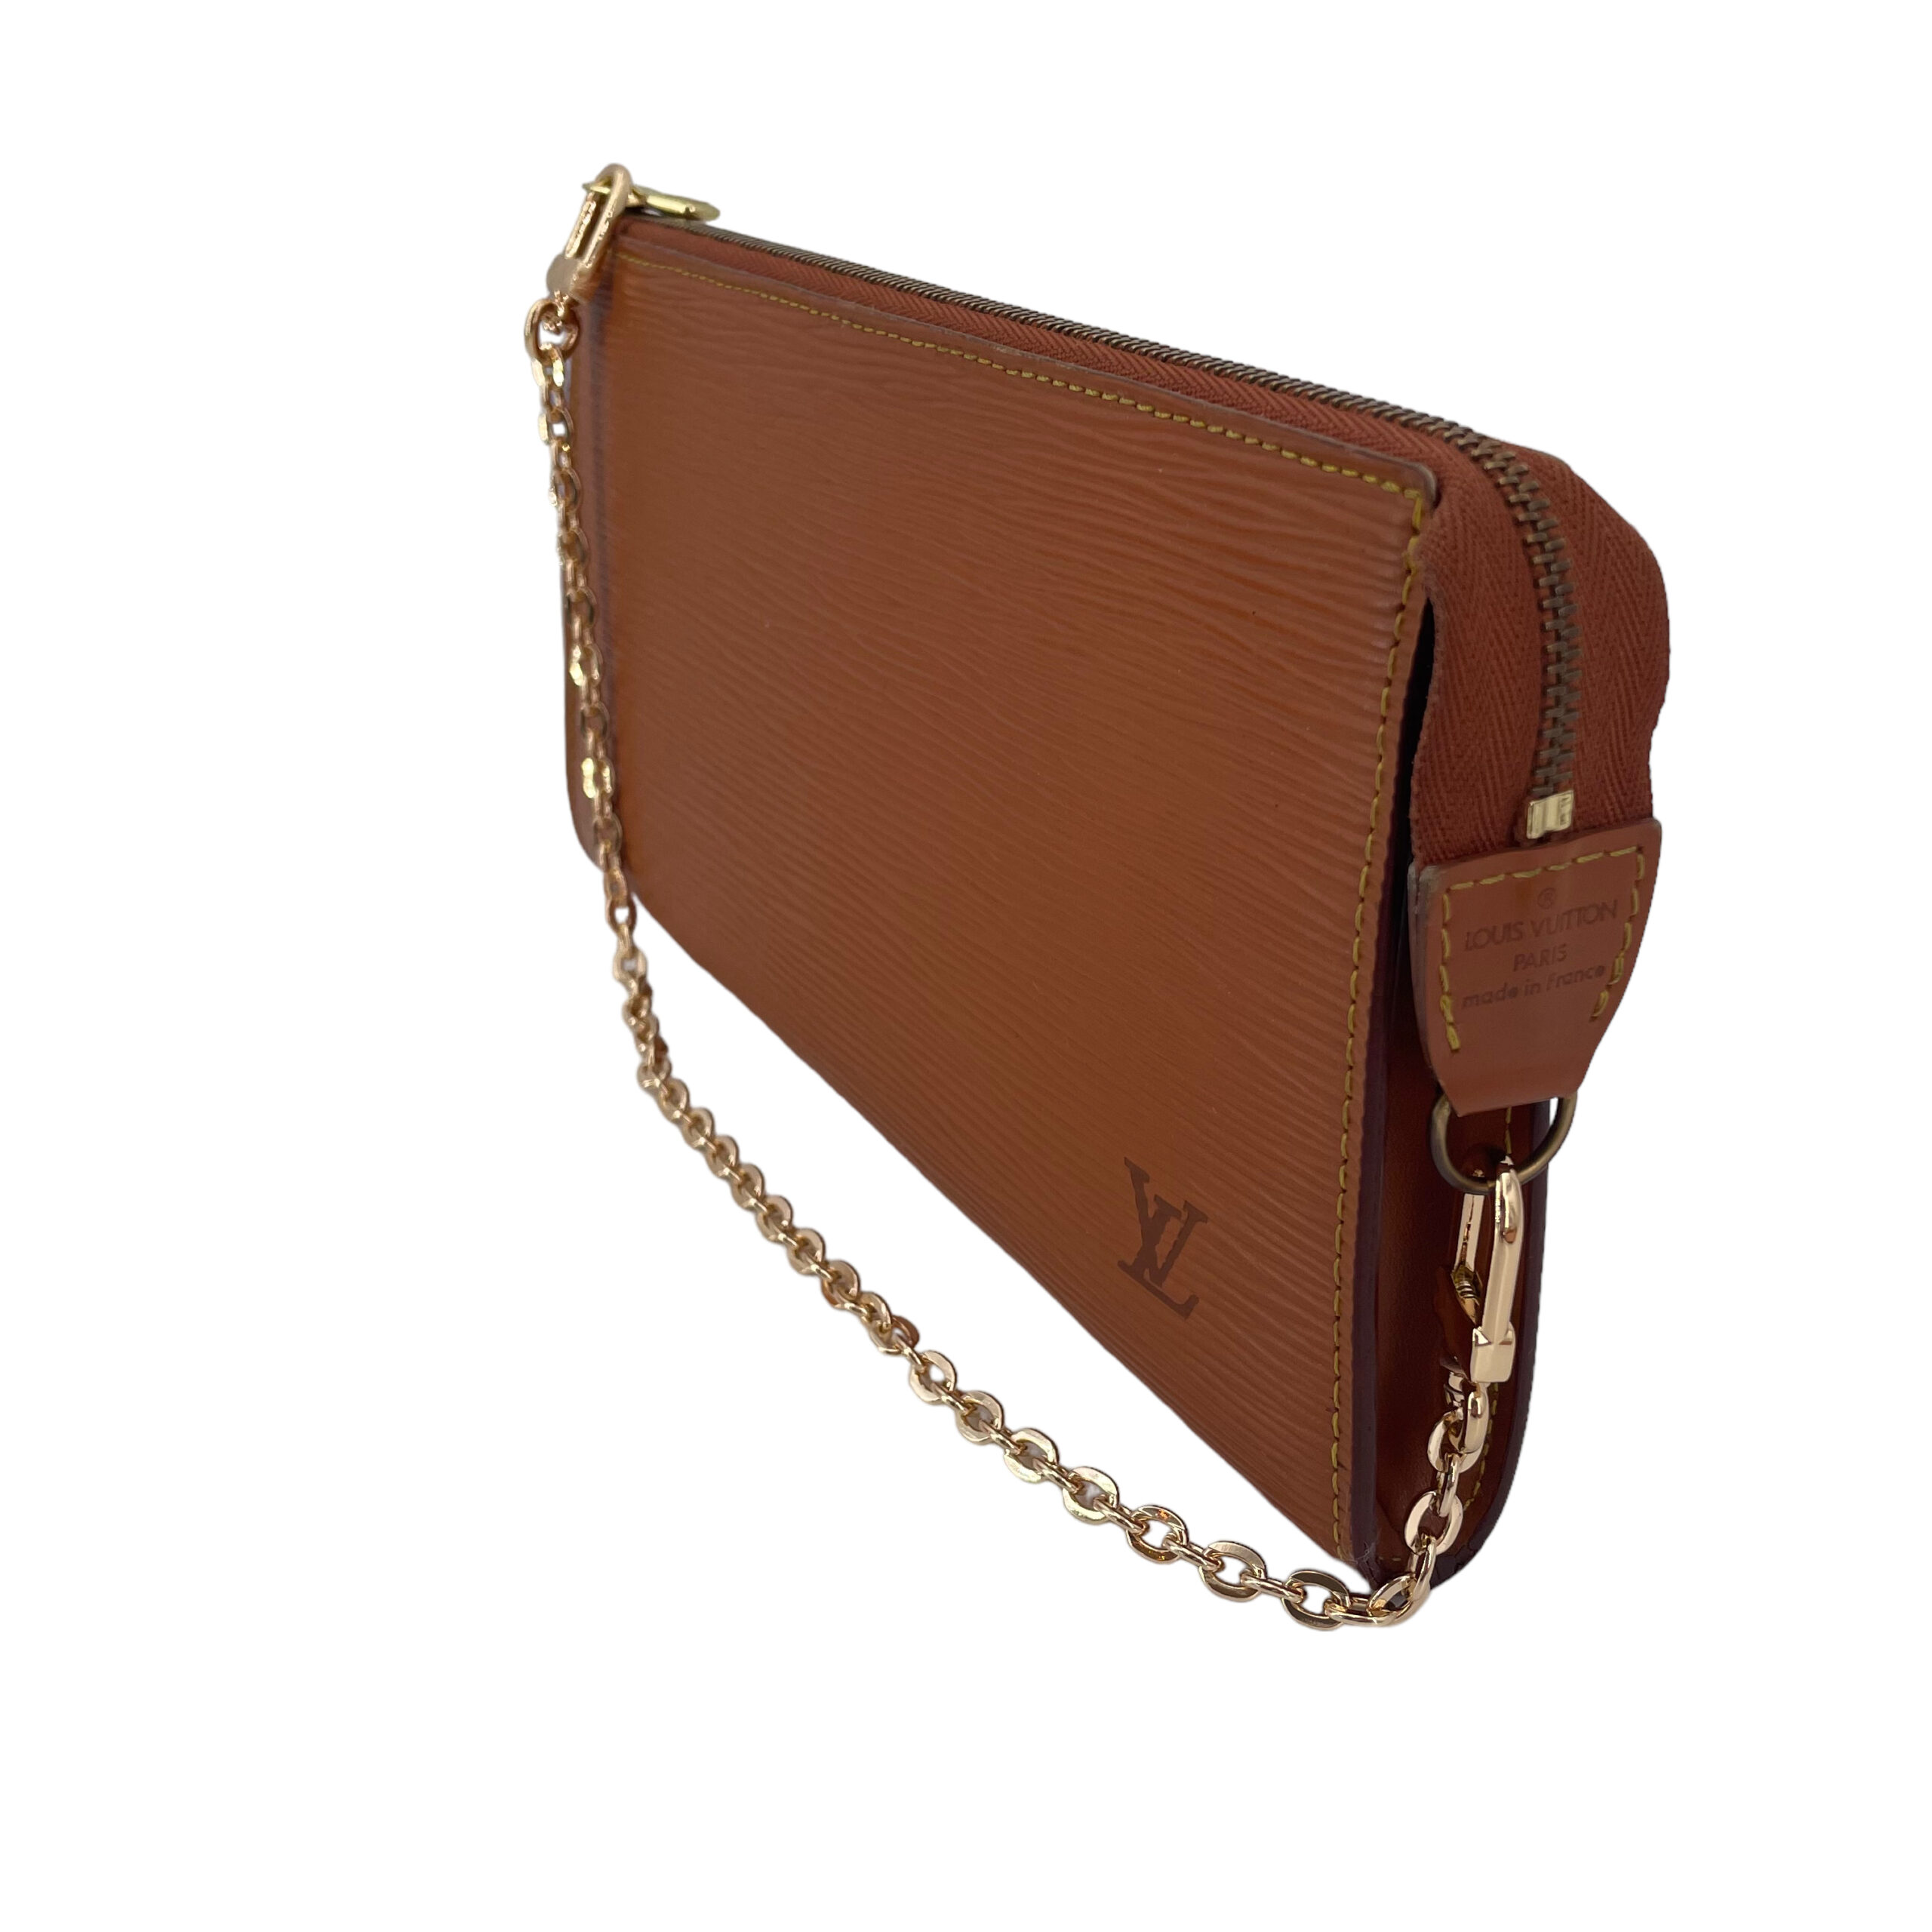 Bag Chain Short Gold - I Love Handbags